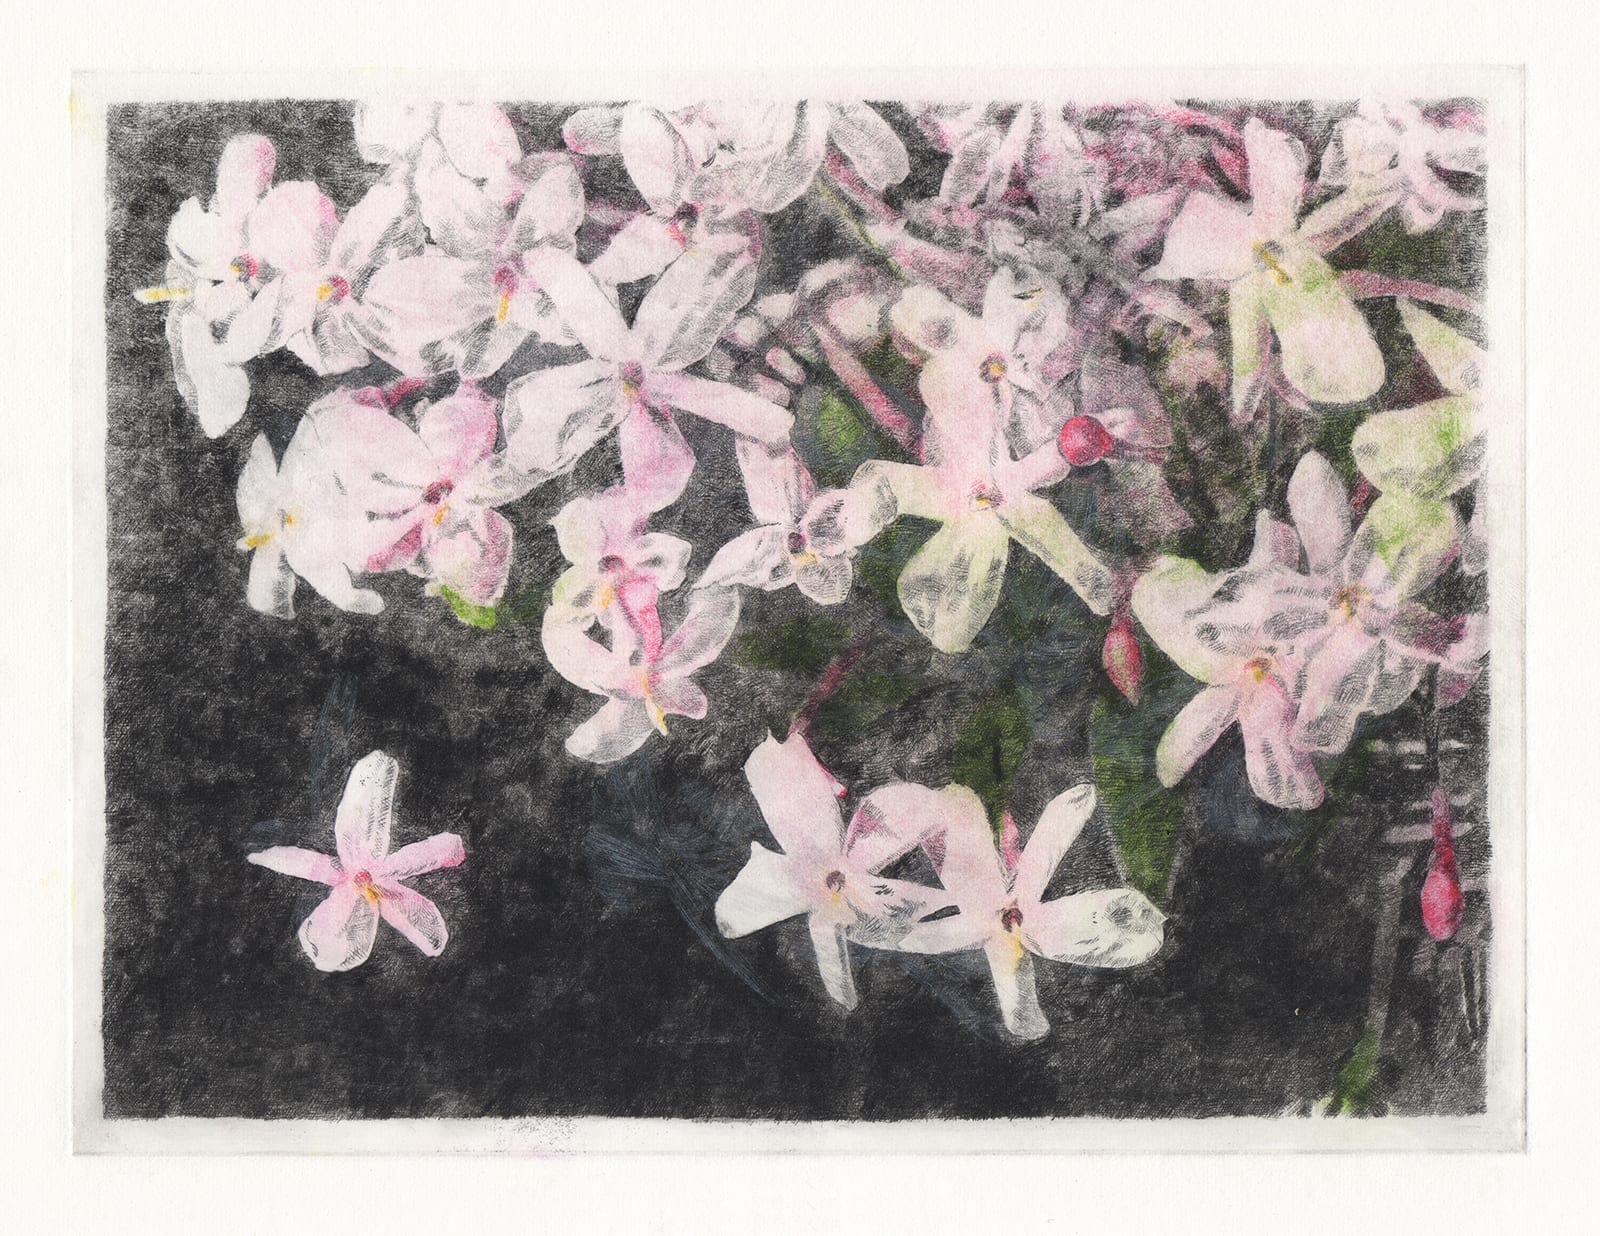 Dancing flowers: Jasmine (drypoint etching by Yaemi Shigyo)